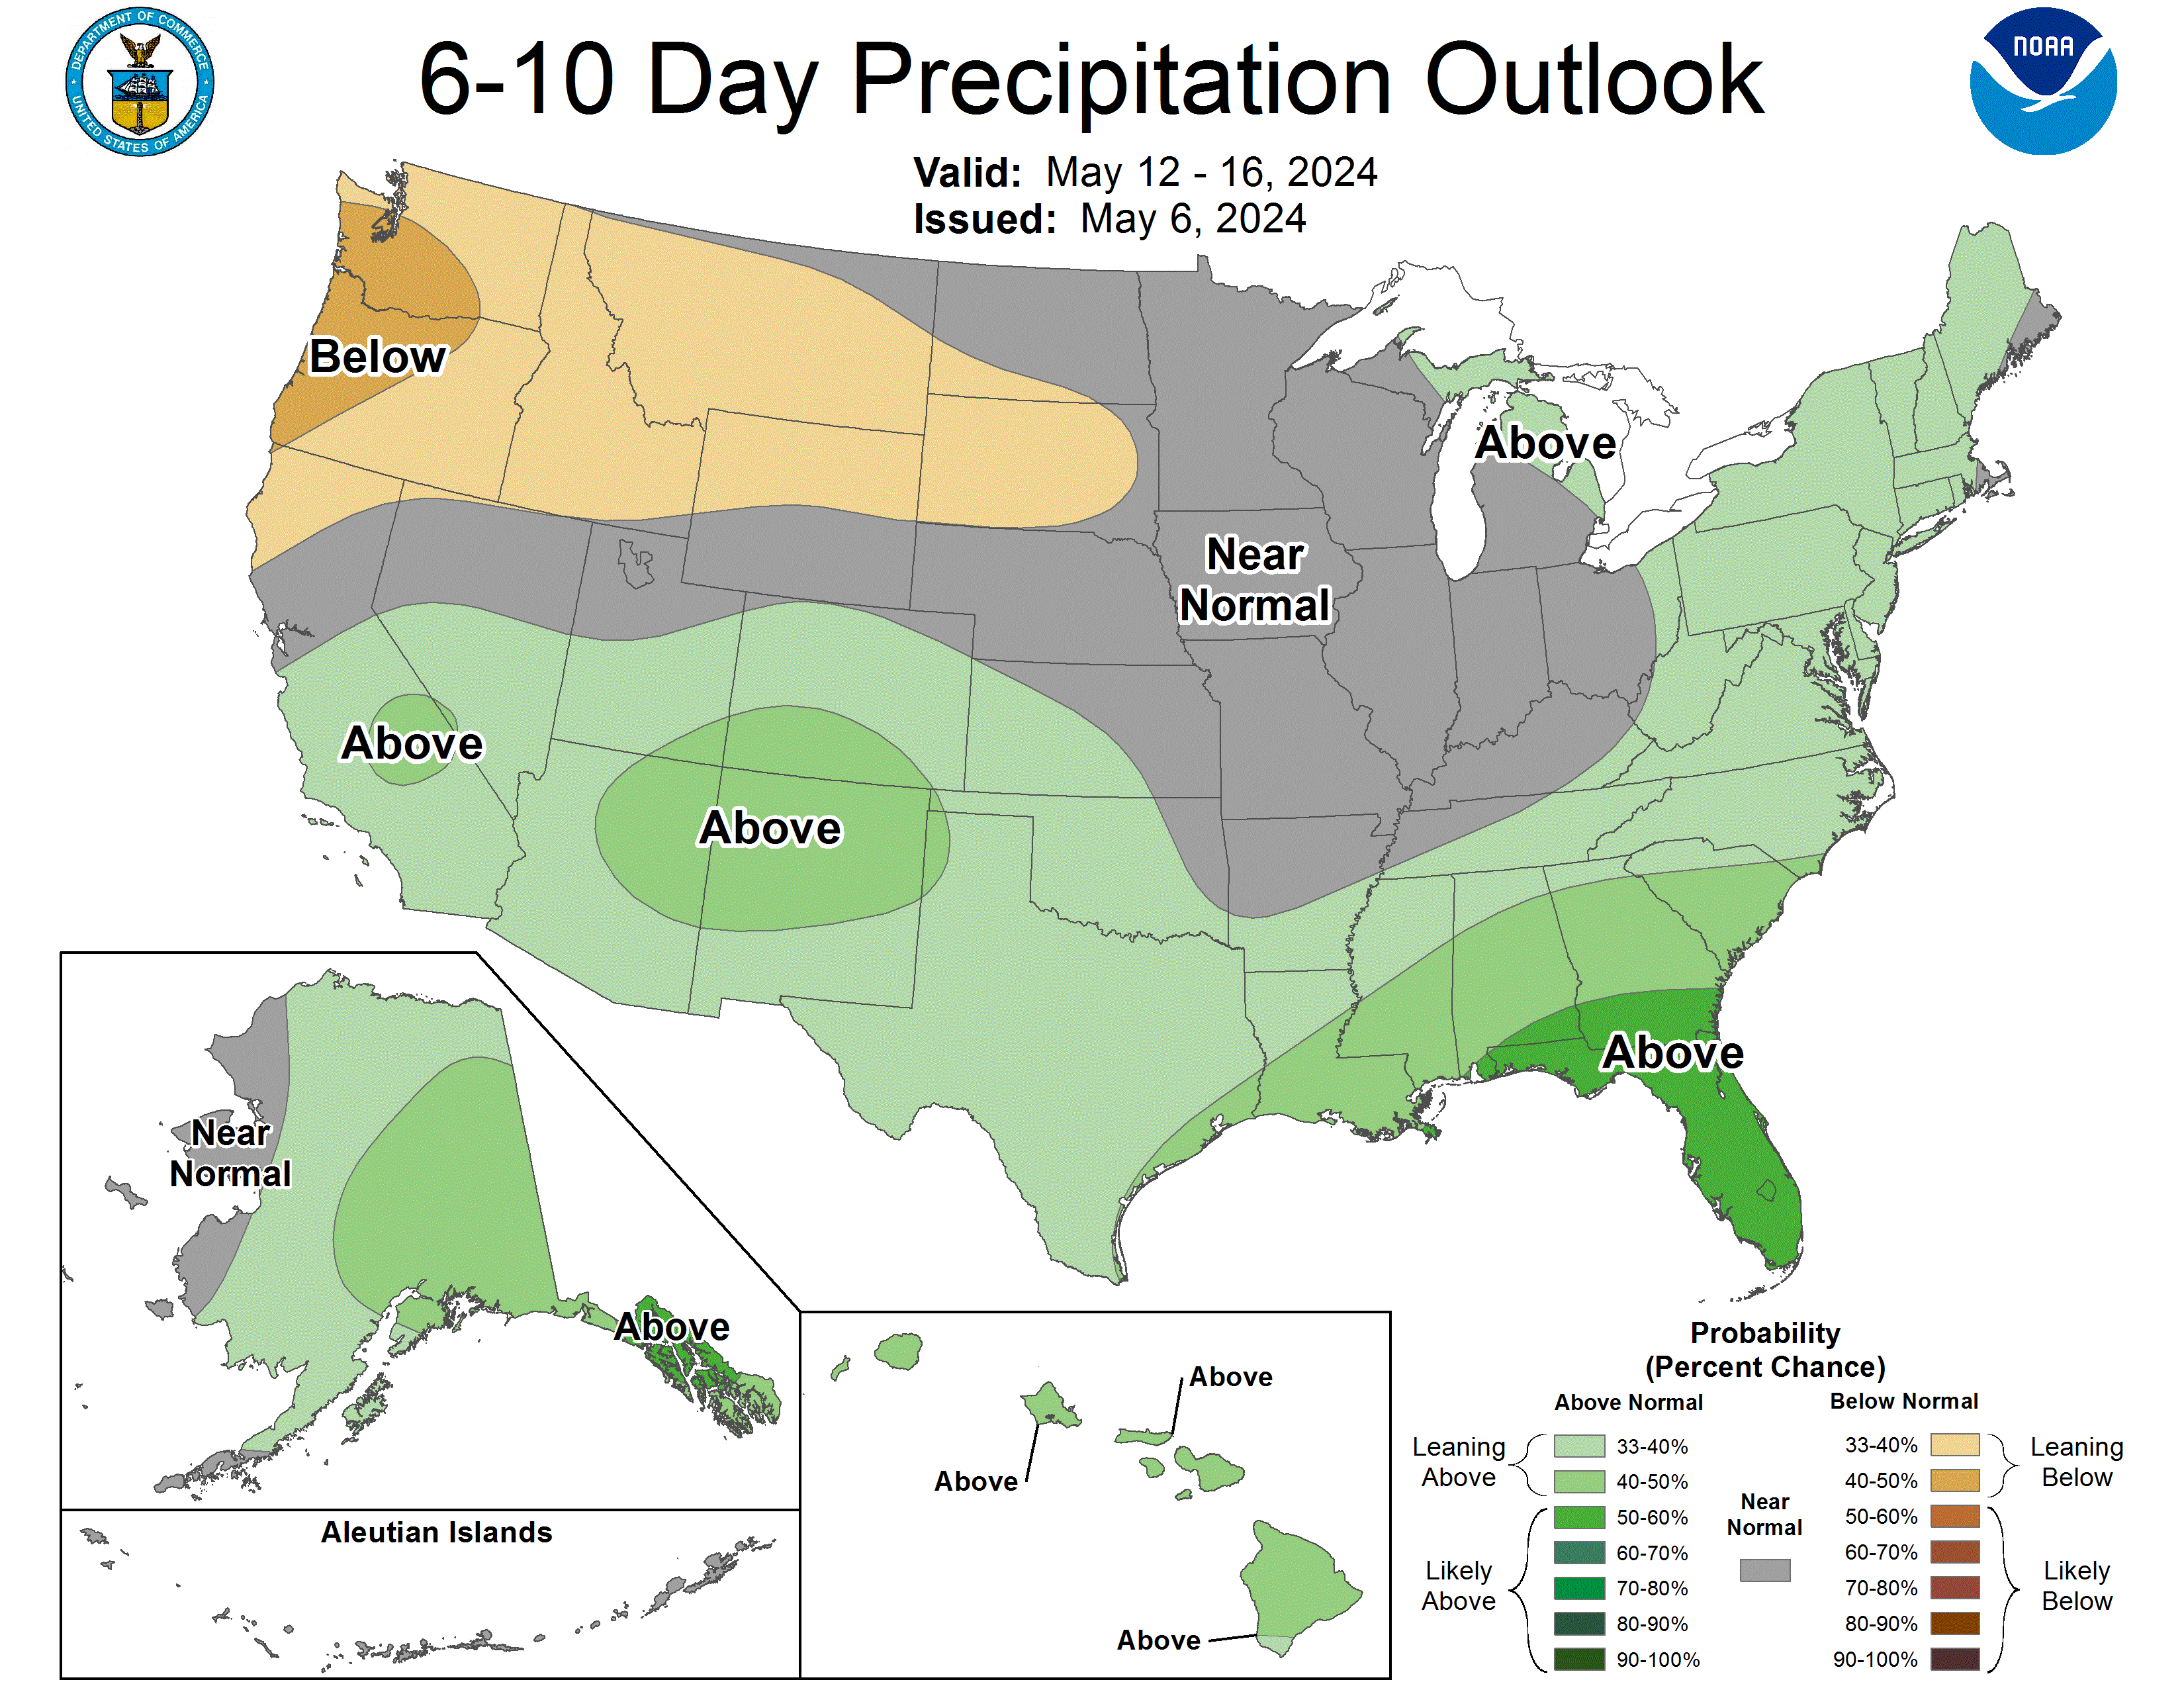 8-14 day precipitation outlook